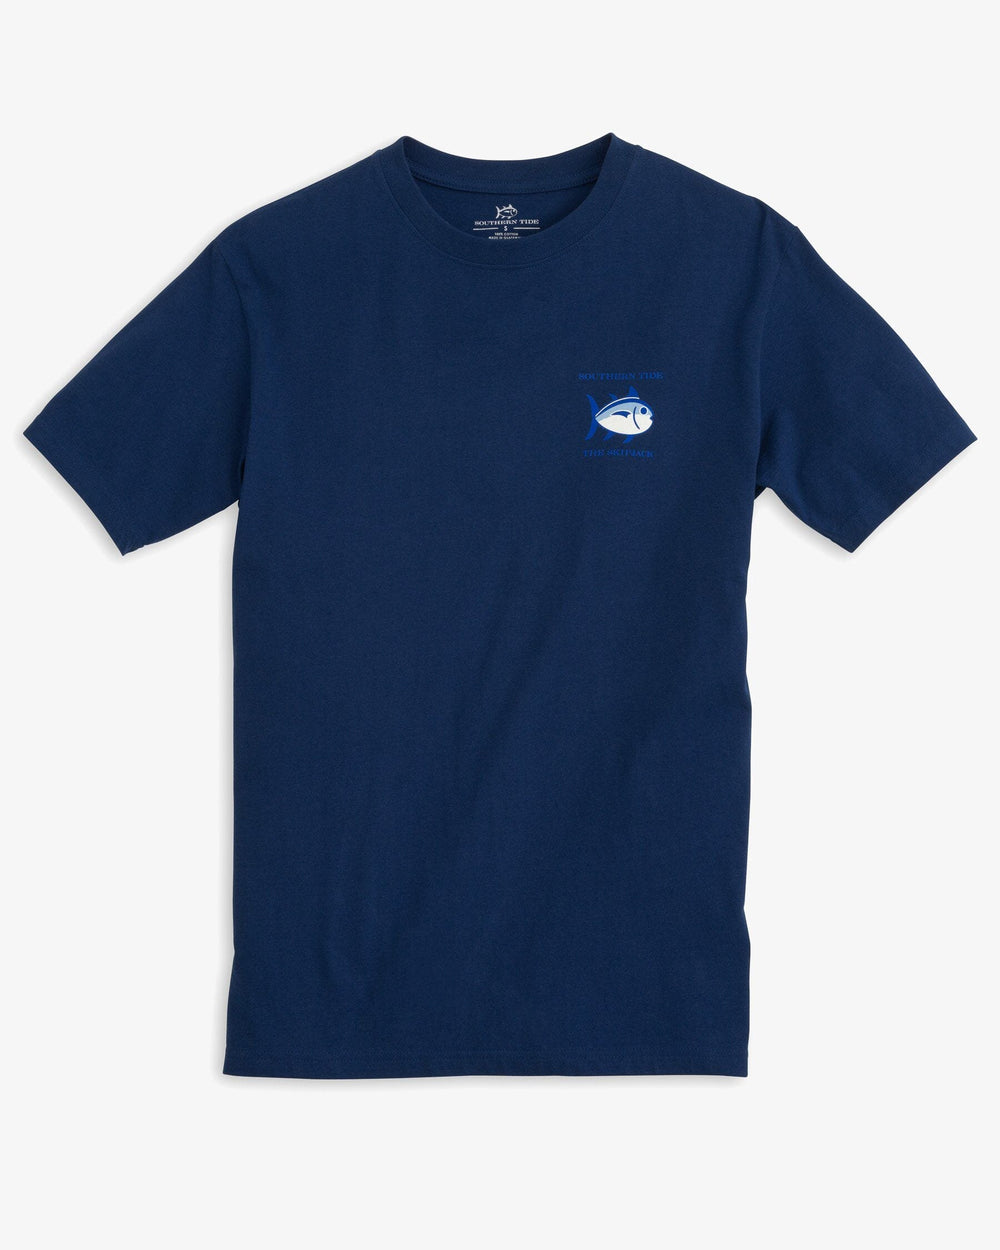 Original Skipjack T-Shirt | Mens Graphic T Shirts | Southern Tide